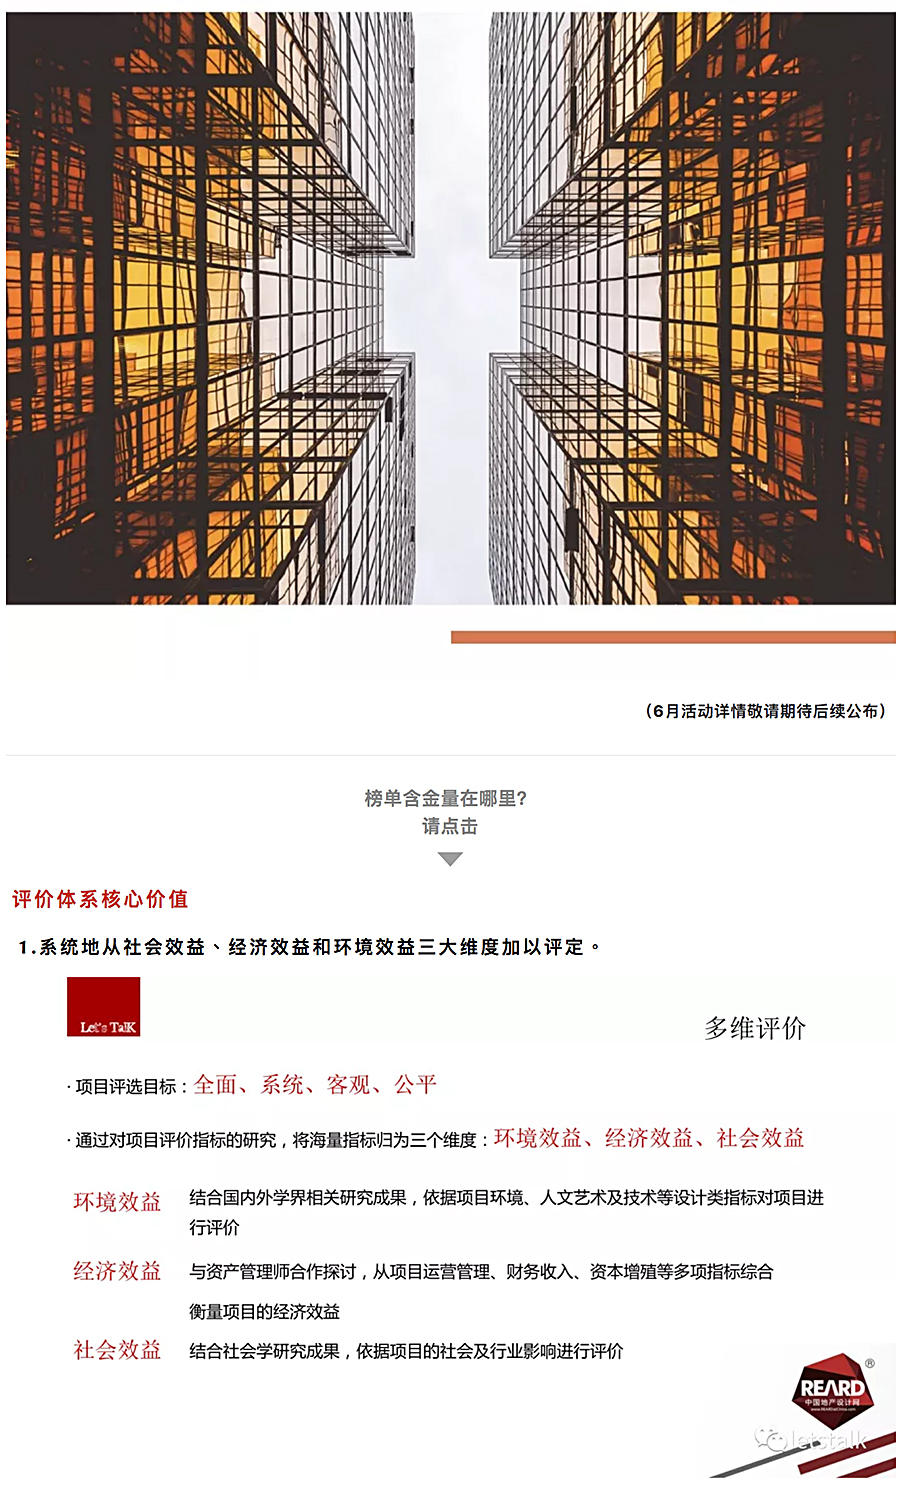 REARD·城市更新推荐榜-_-中国城市更新第一榜系列活动（6月前大合辑）_0004_图层-5.jpg